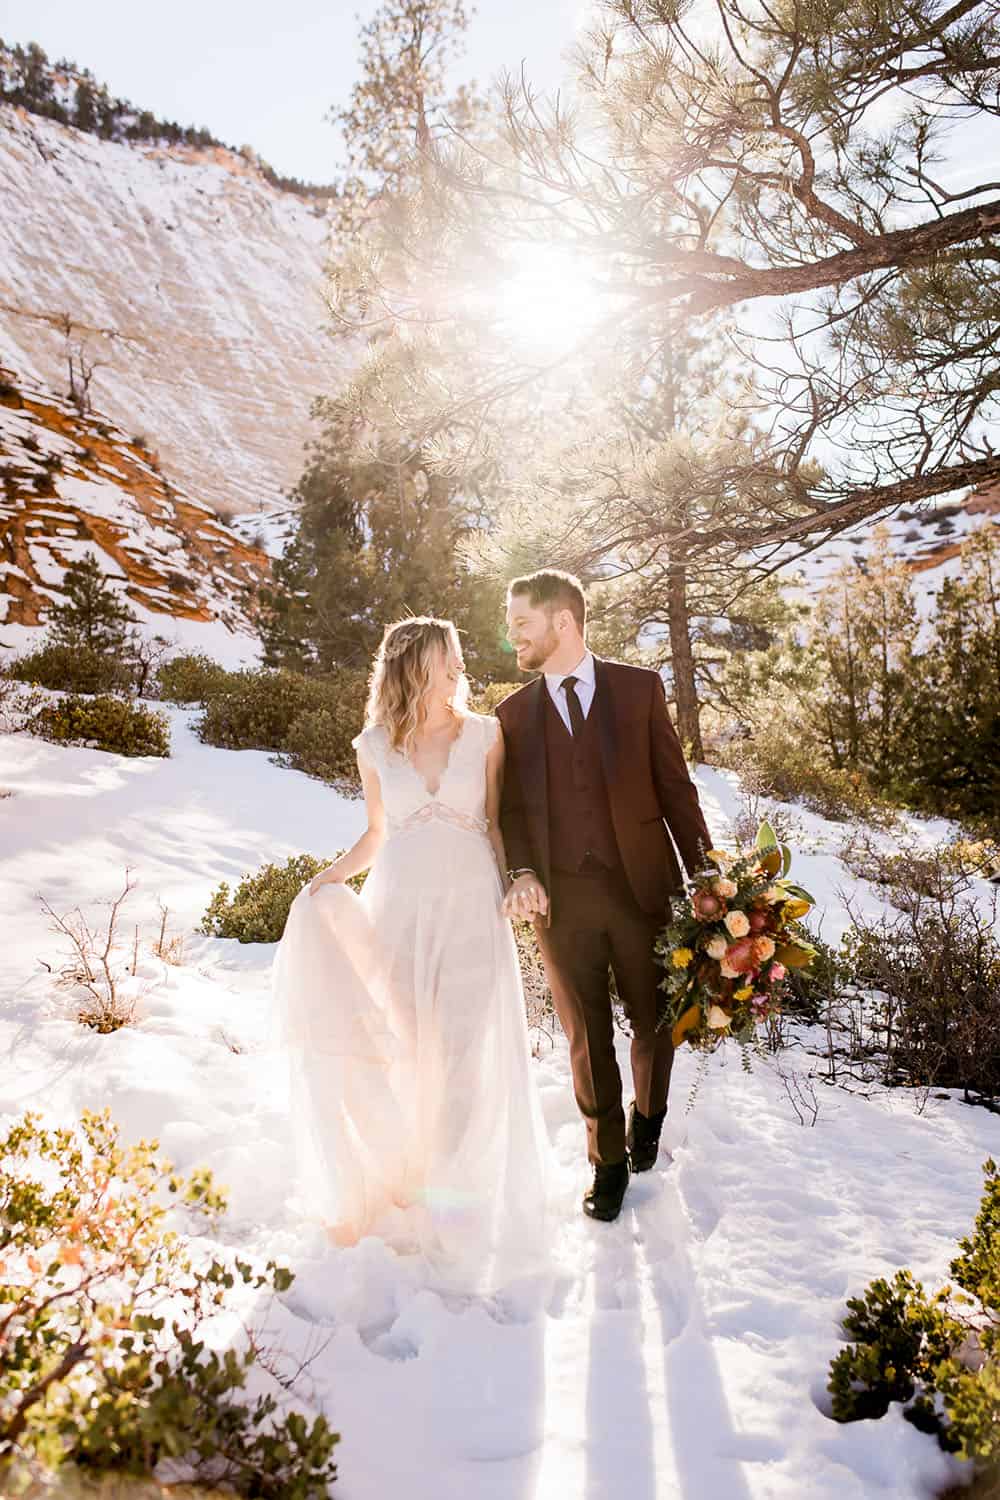 50 Unique Winter Wedding Groom Looks To Consider ⋆ Ruffled